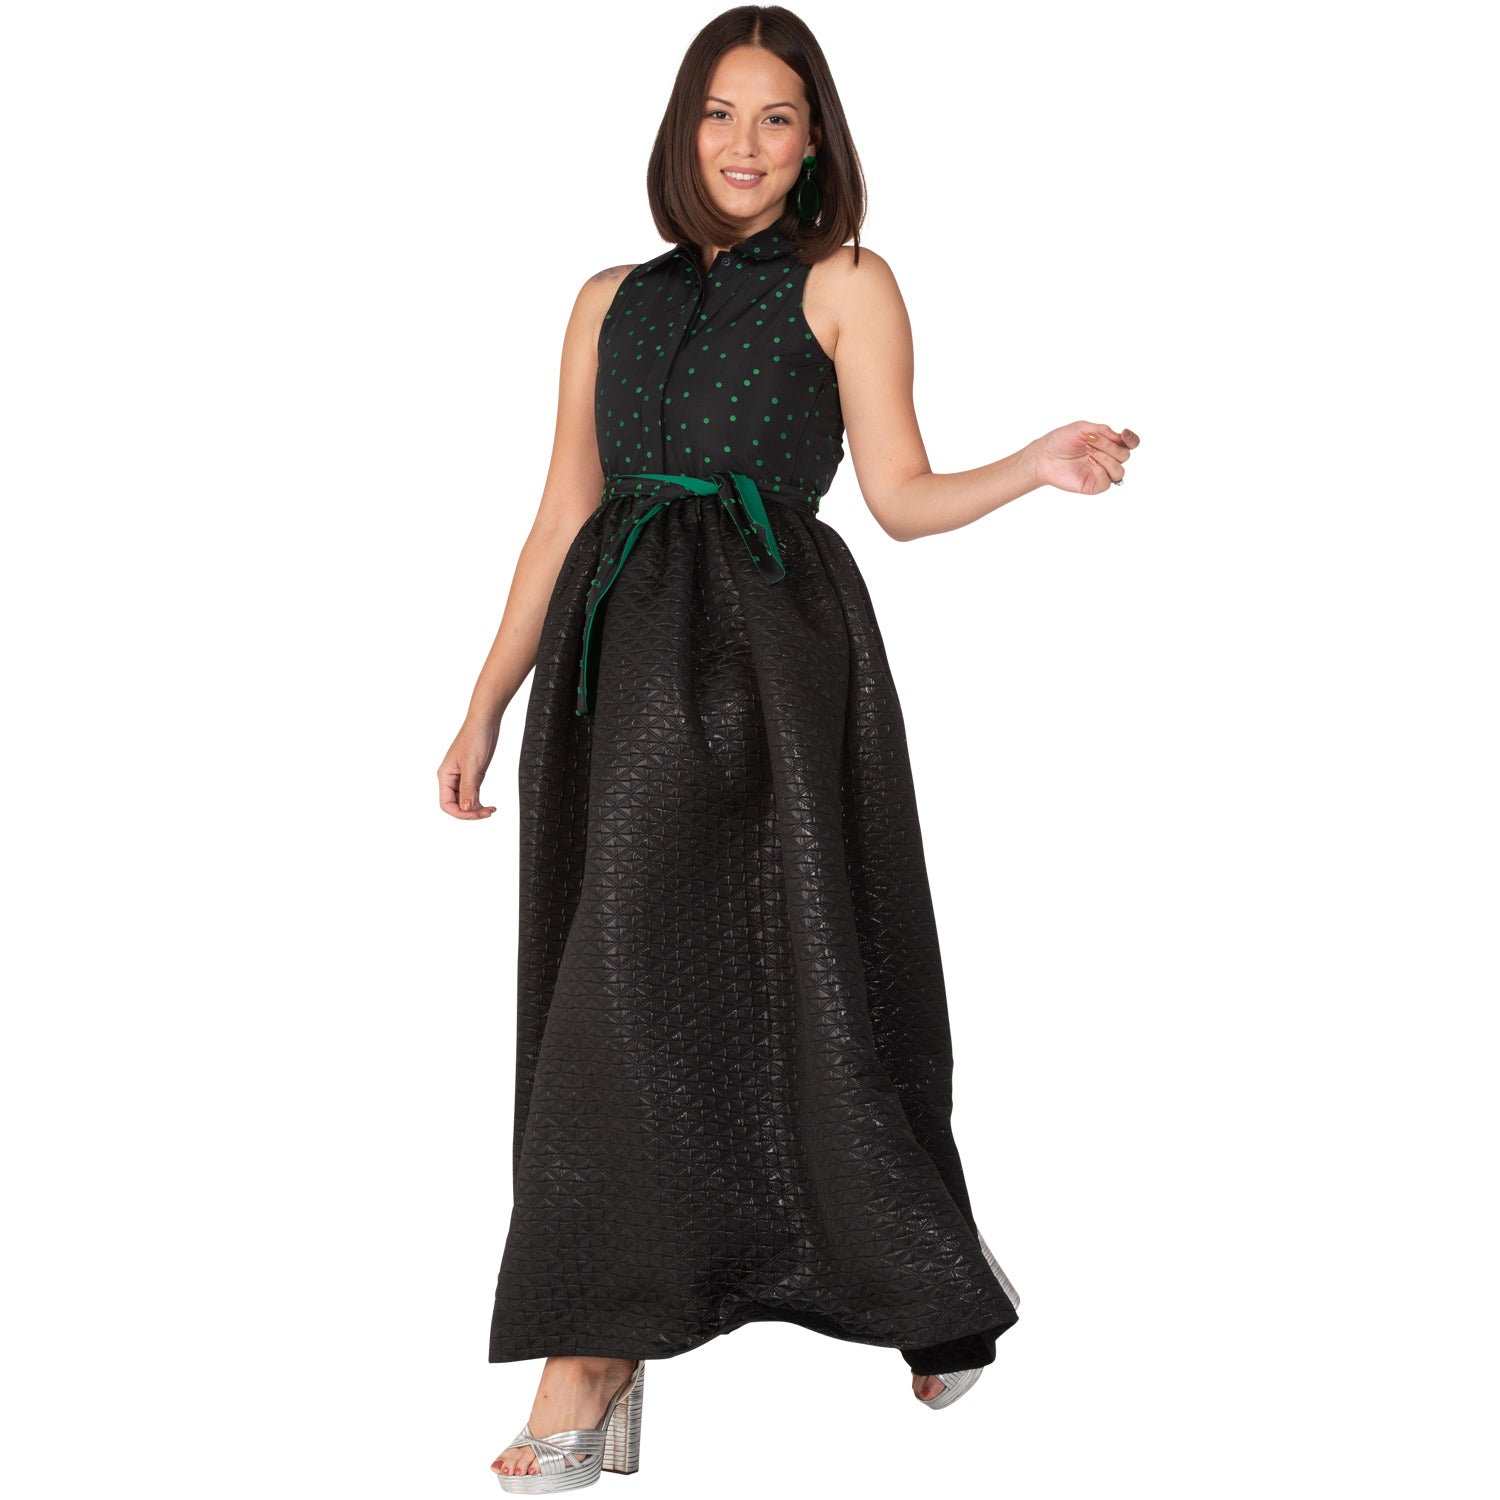 SAMPLE The Sleeveless New Look Shirtdress - Green Dot & Black Brocade